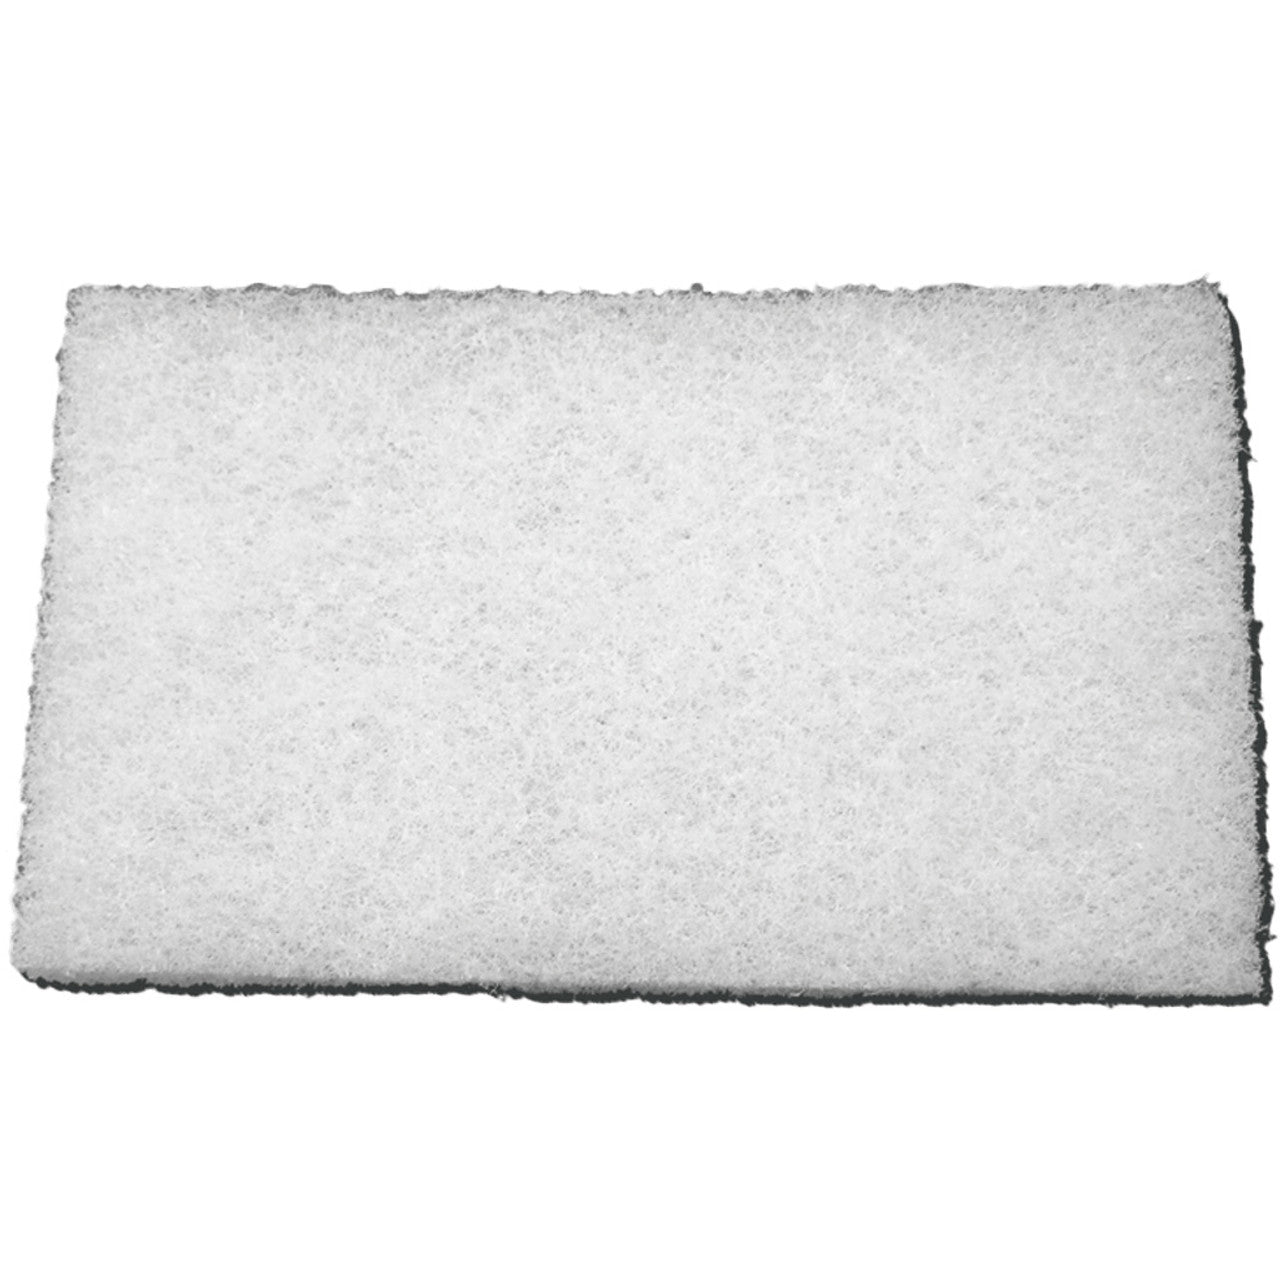 Basic White Scrub Pad